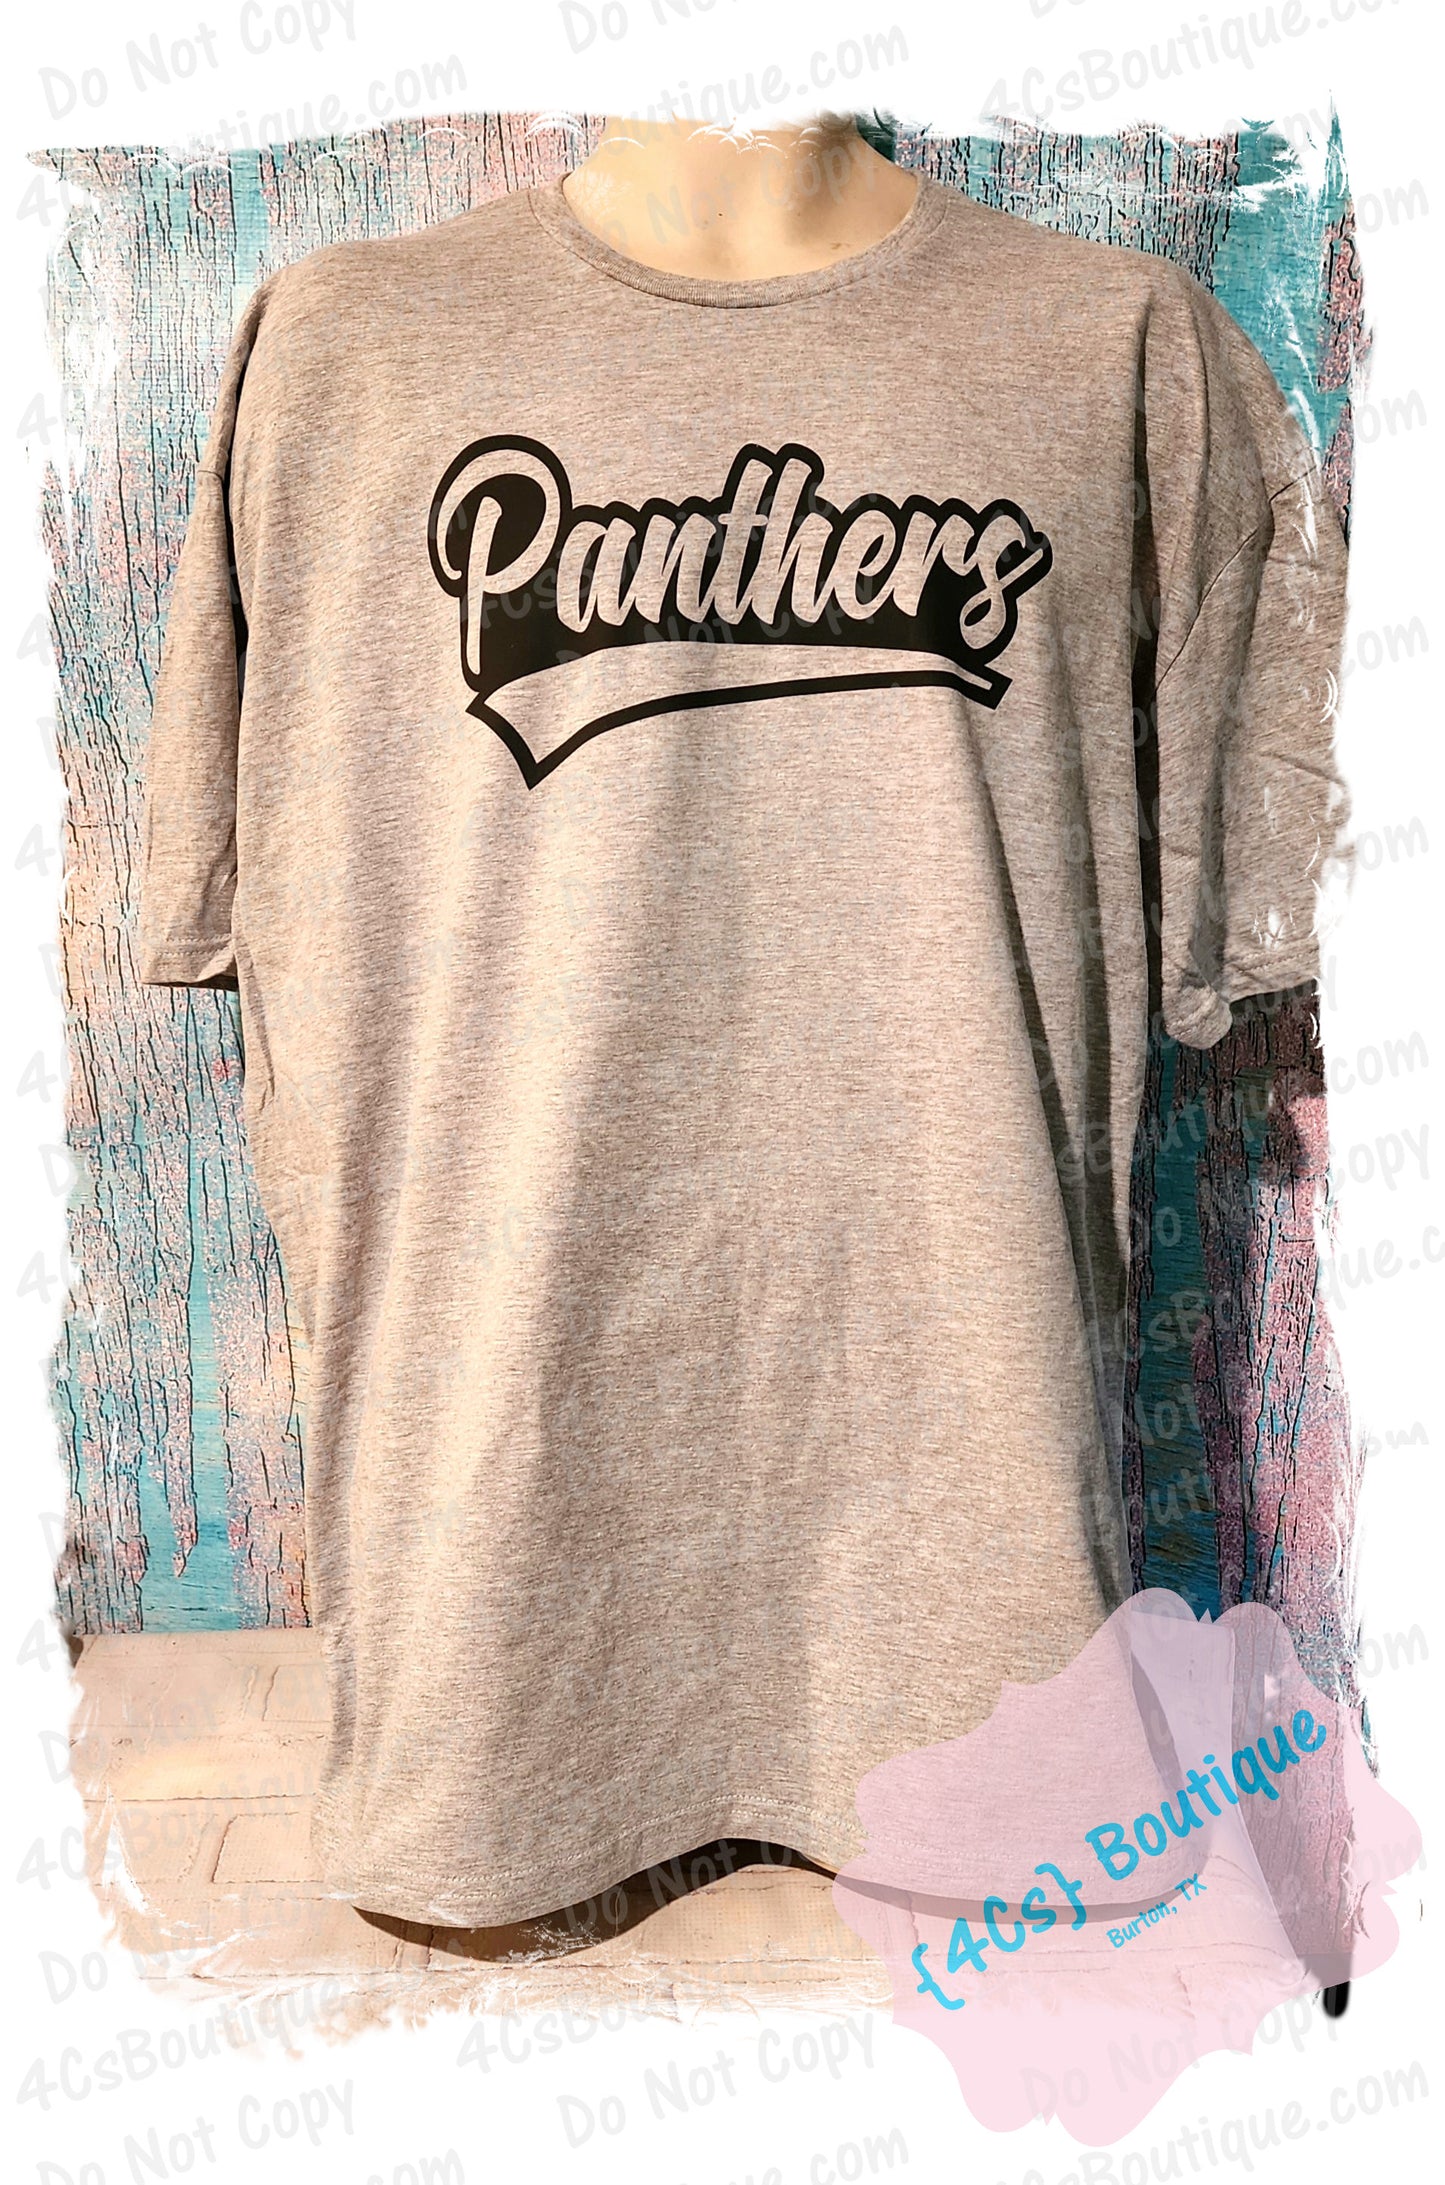 Panthers Swoosh Shirt